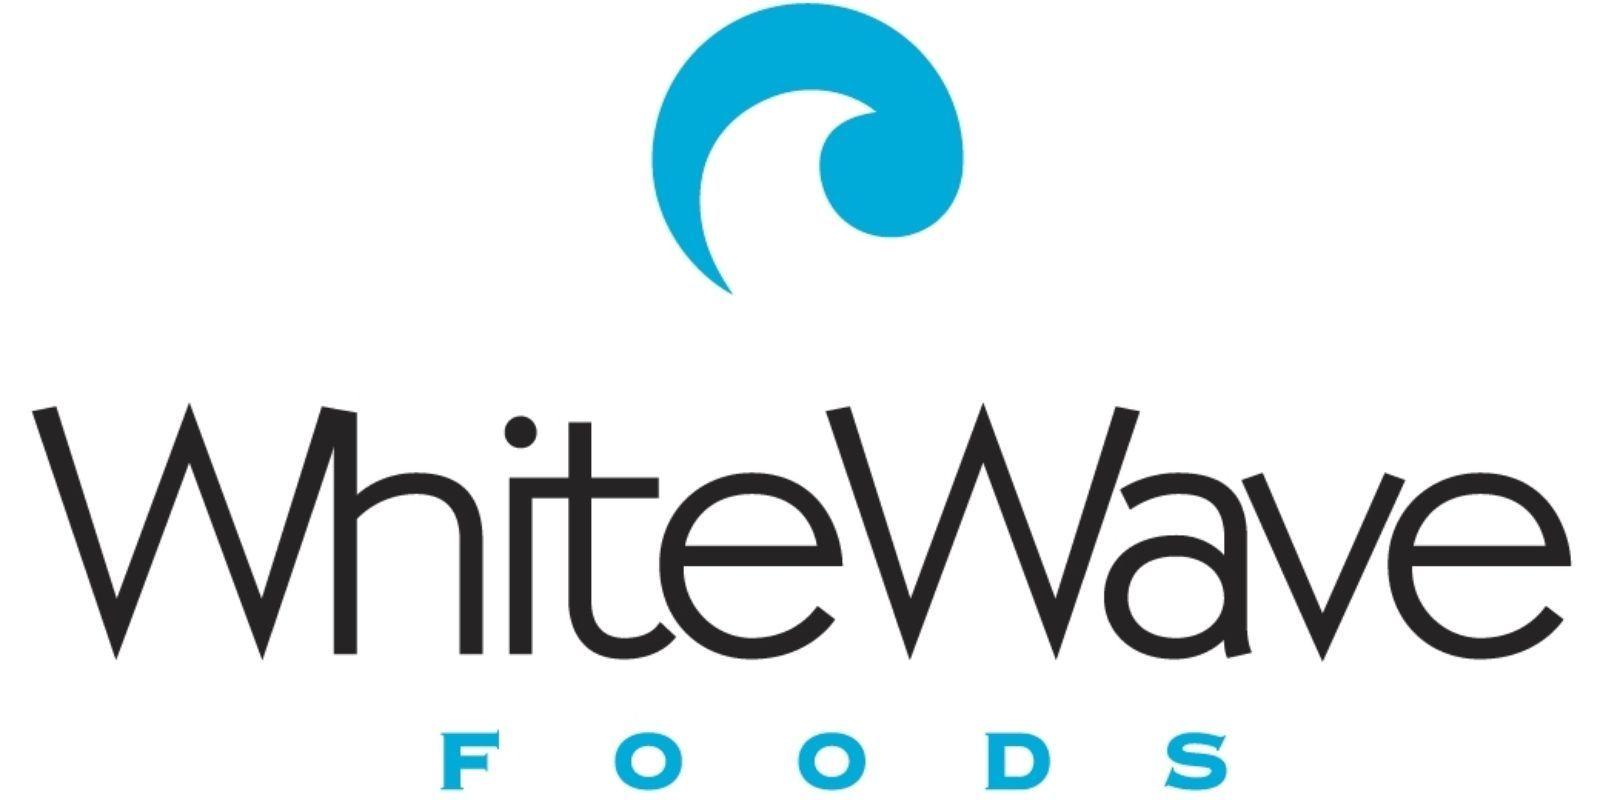 WhiteWave Logo - Whitewave Foods Mt Crawford Va Jobs